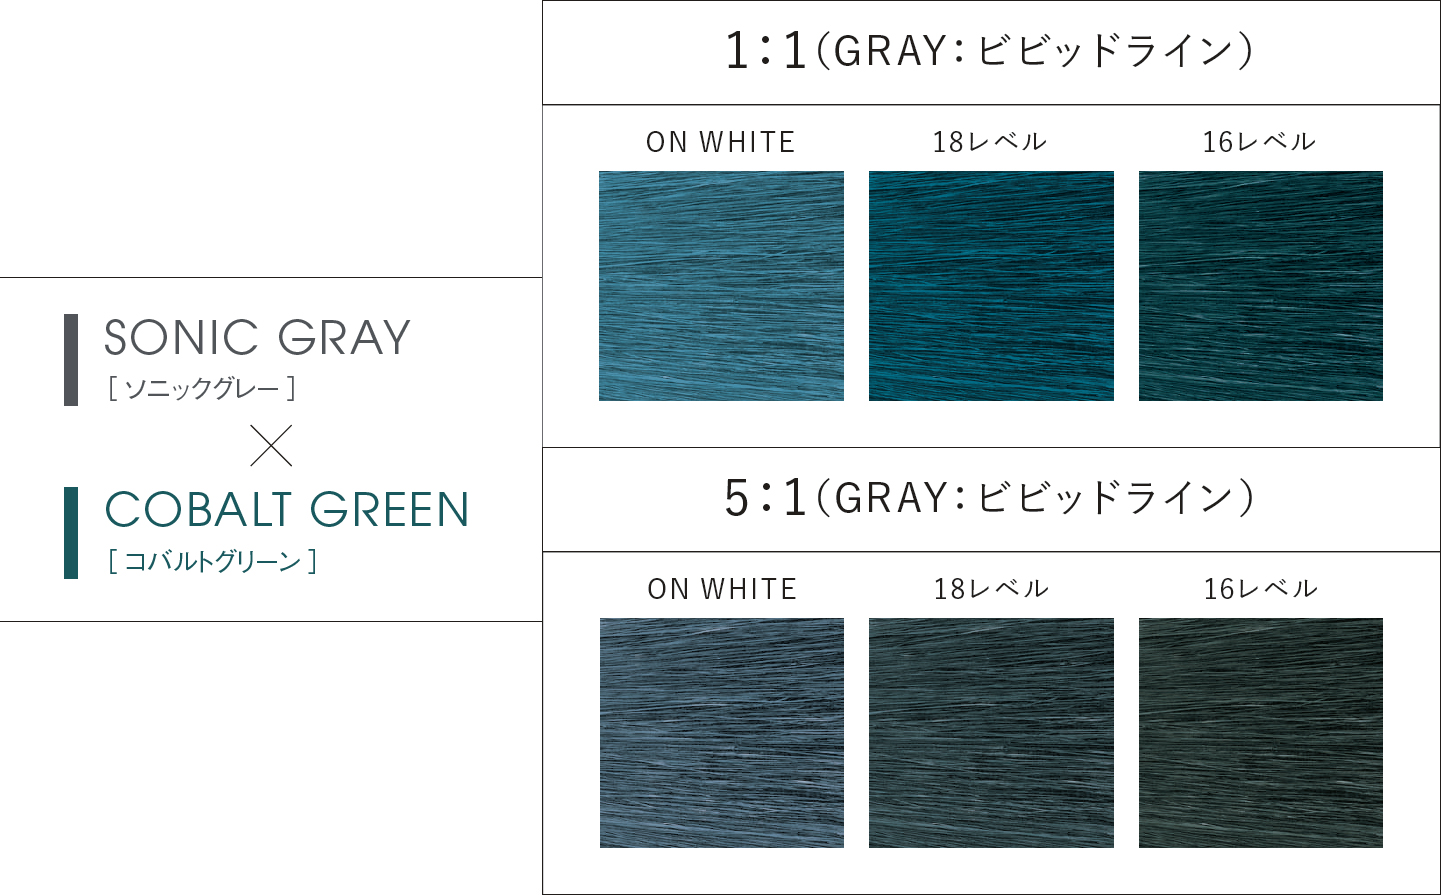 SONIC GRAY(ソニックグレー) × COBALT GREEN(コバルトグリーン)